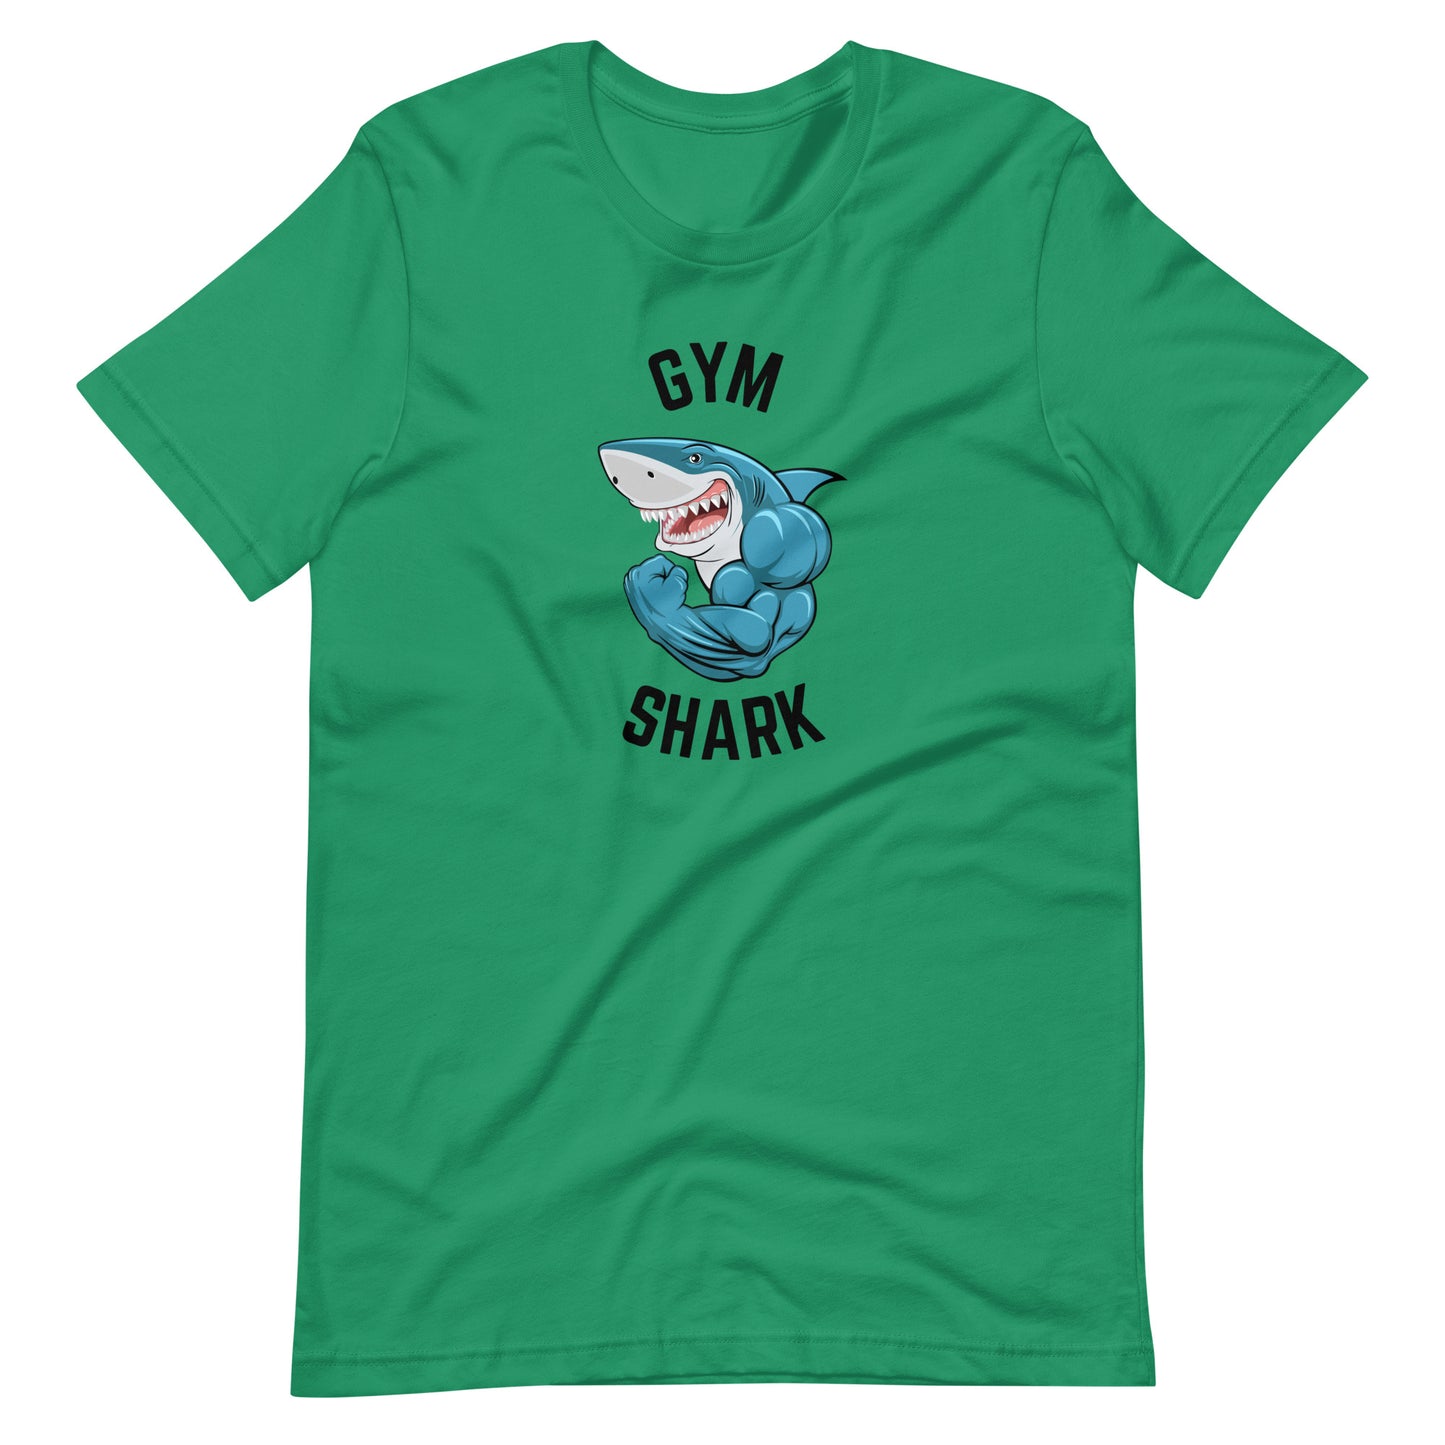 "Gym Shark" Unisex T-Shirt